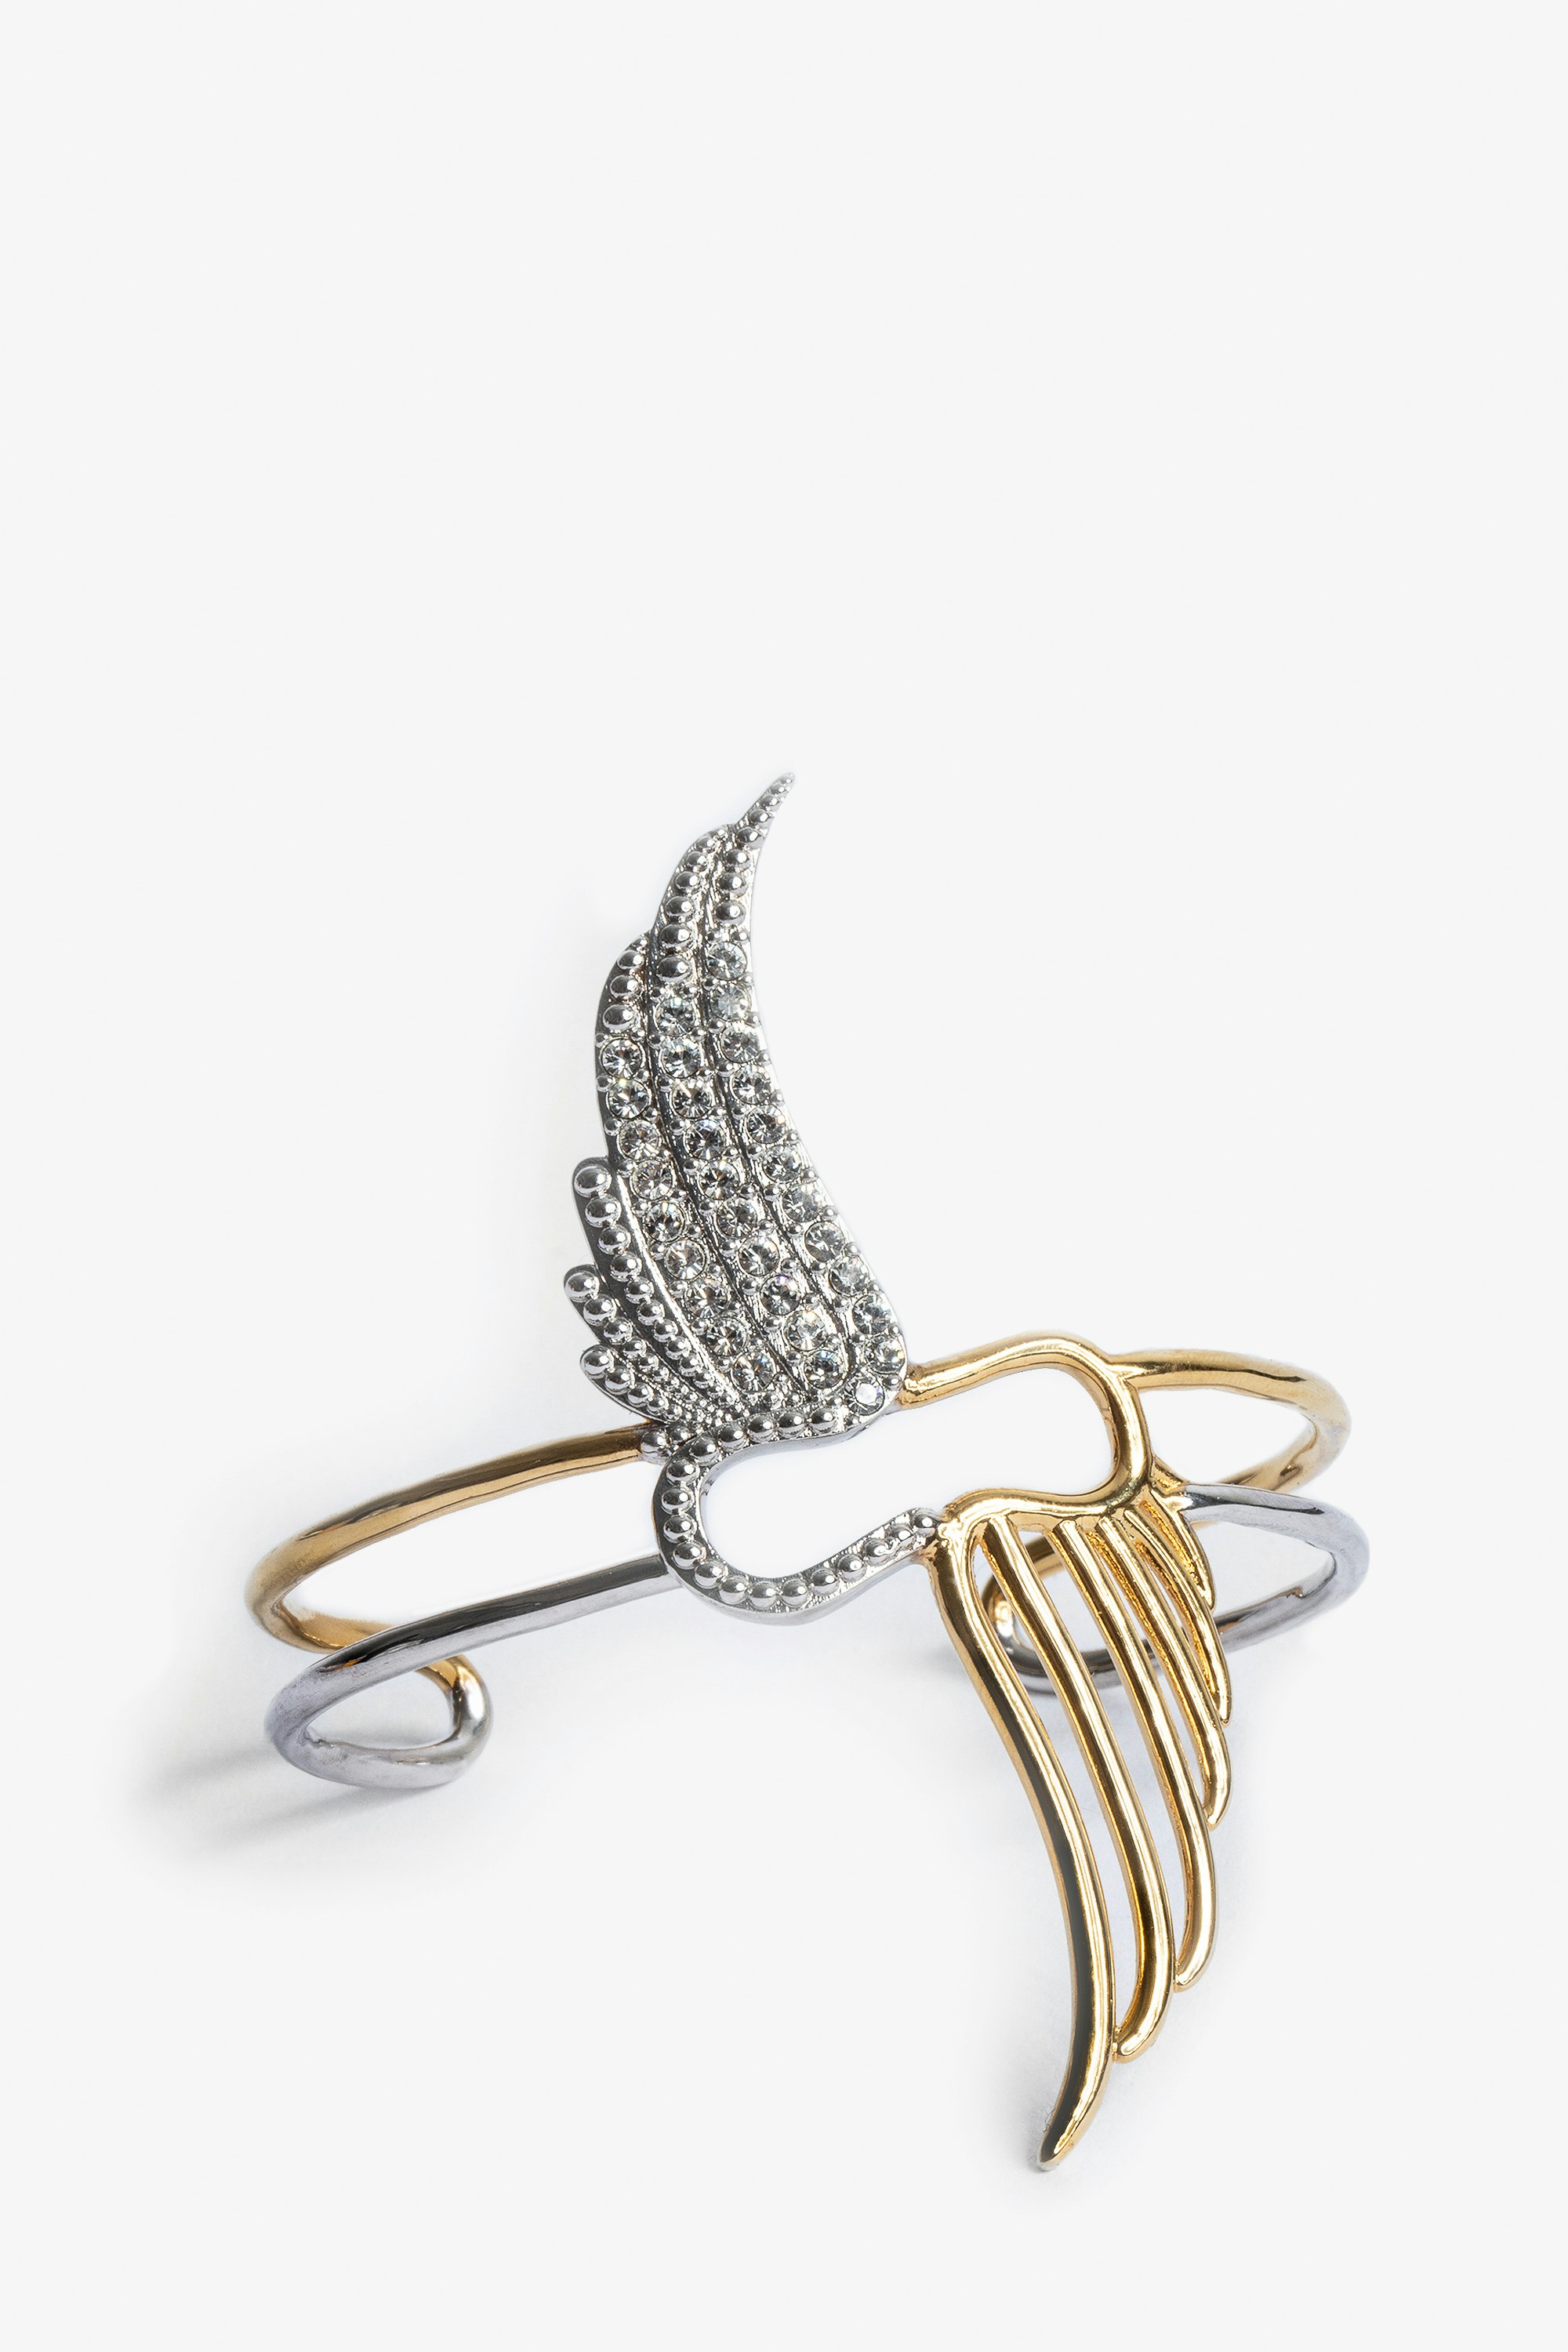 Rock Over Bracelet Women’s gold-tone brass bangle with white crystal embellishment